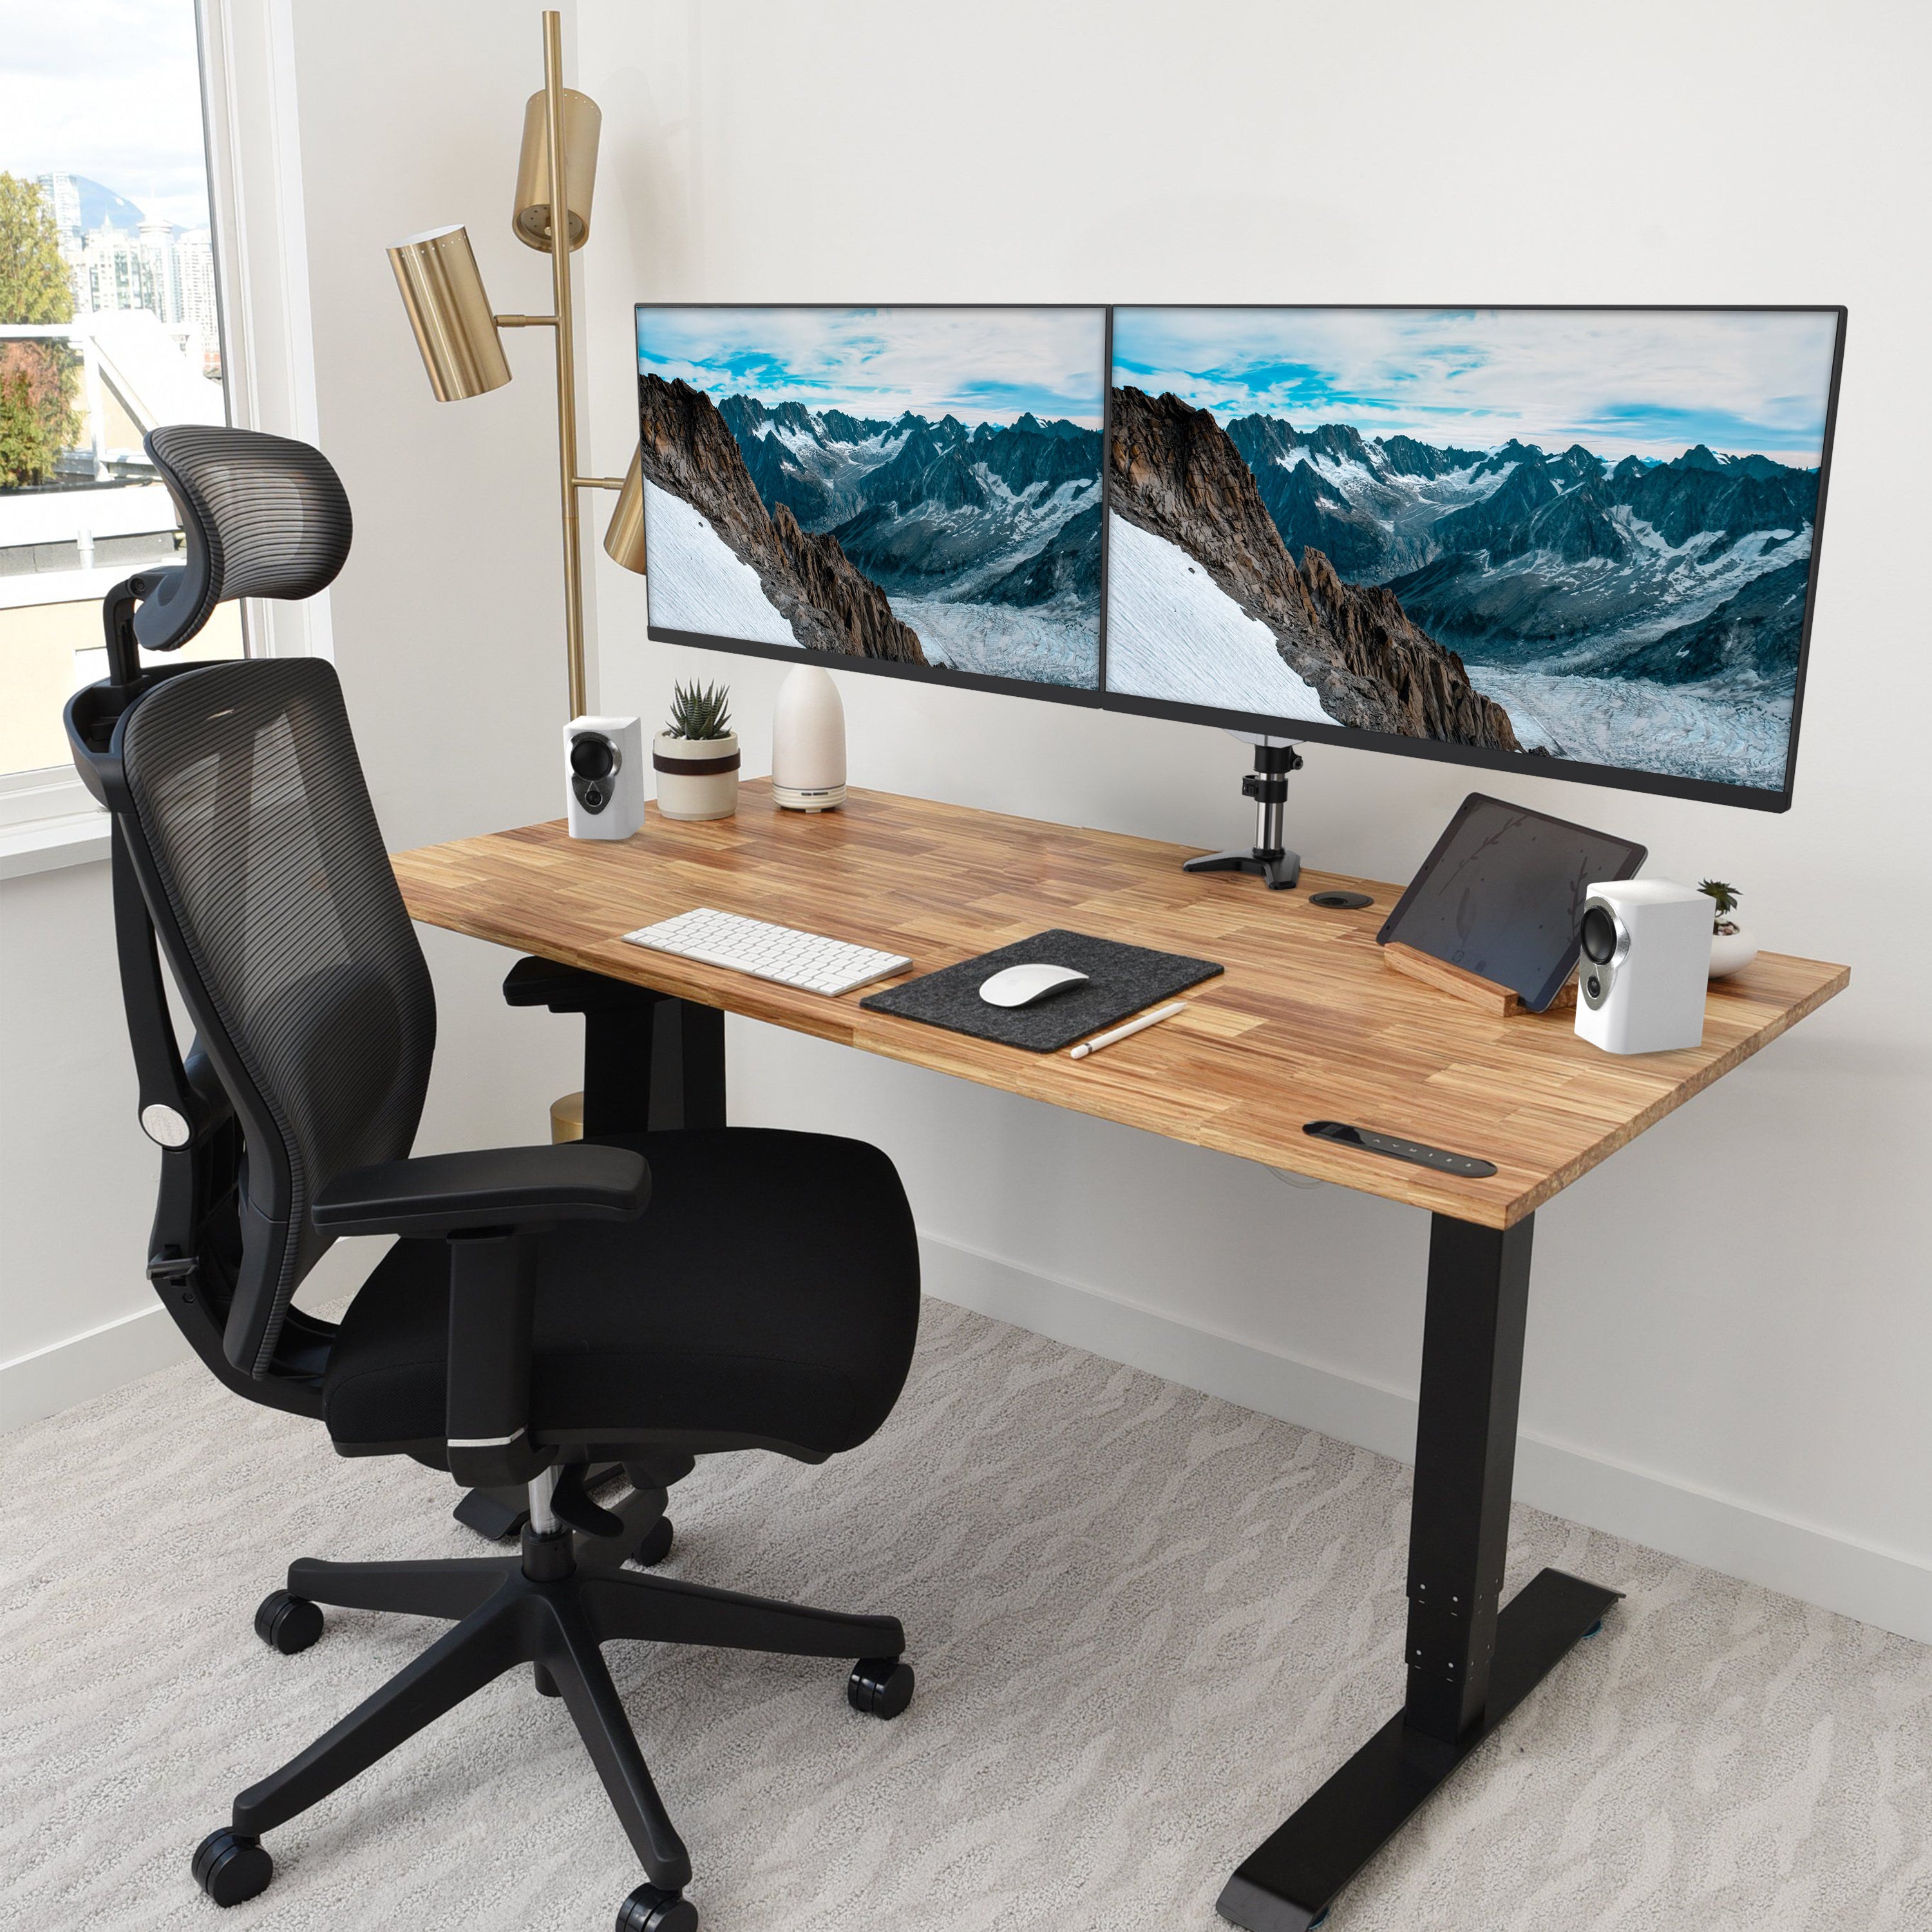 Double Monitor Arm Desk Mount